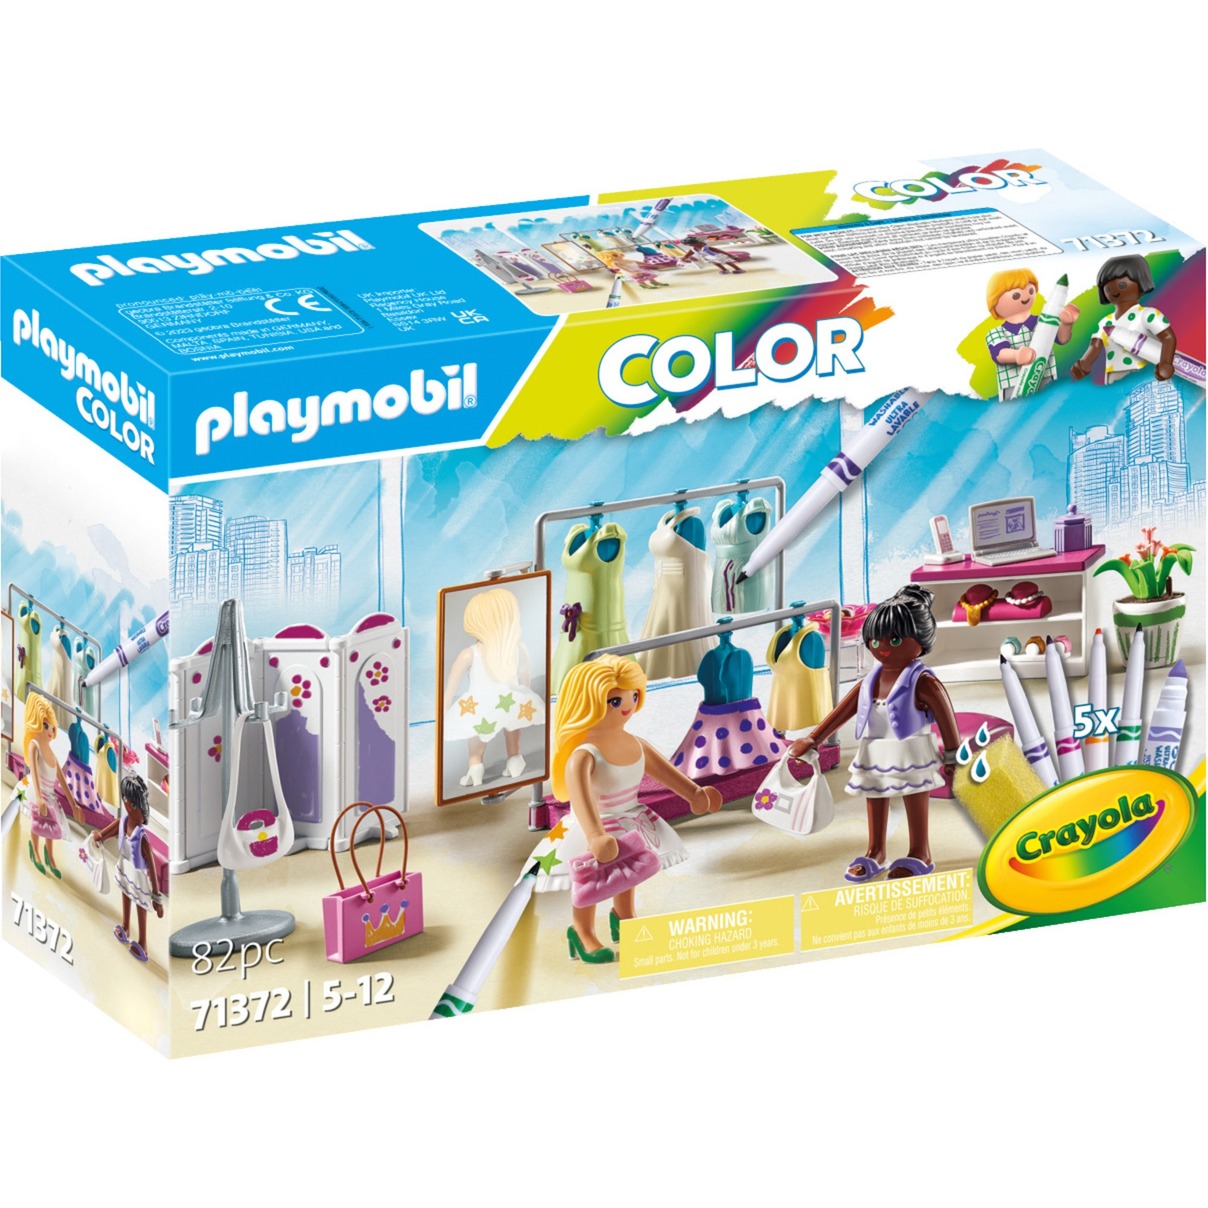 71372 Color Fashionboutique, Konstruktionsspielzeug von PLAYMOBIL